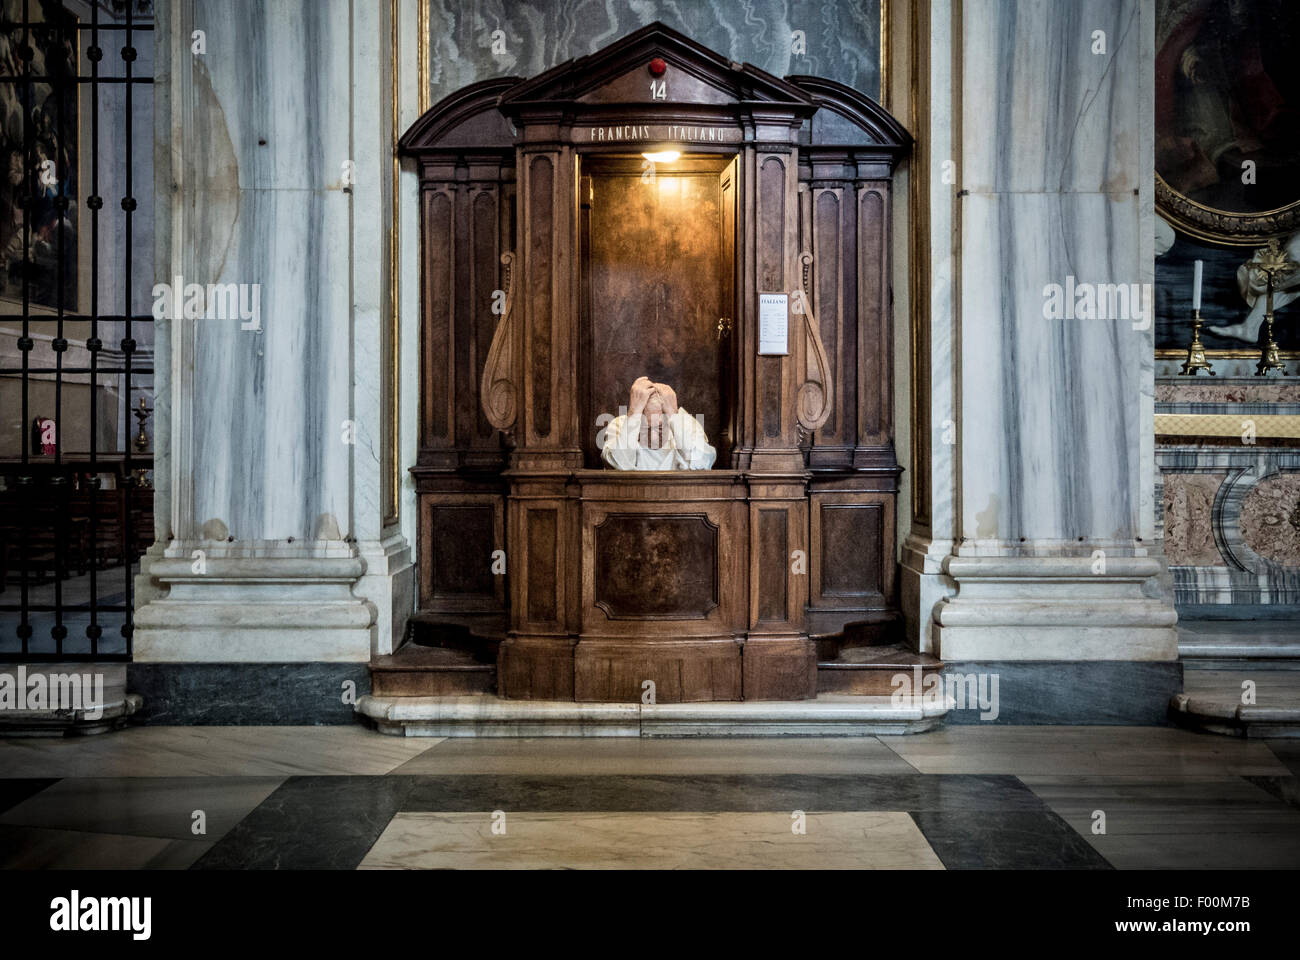 Priester in Beichtstand in der Basilika Santa Maria Maggiore, Rom, Italien. Stockfoto